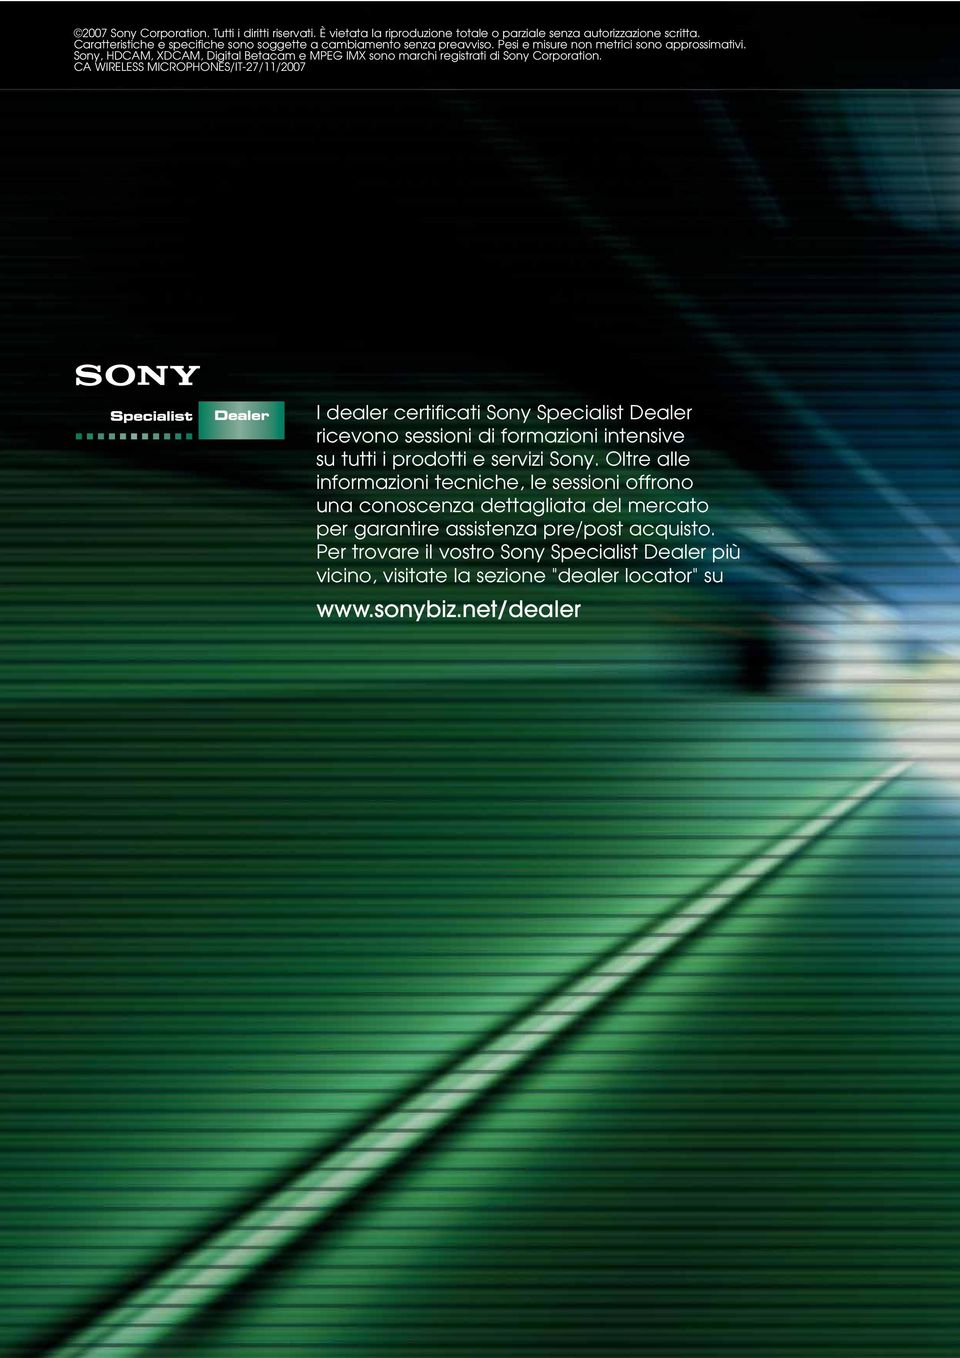 Sony, HDCAM, XDCAM, Digital Betacam e MPEG IMX sono marchi registrati di Sony Corporation.